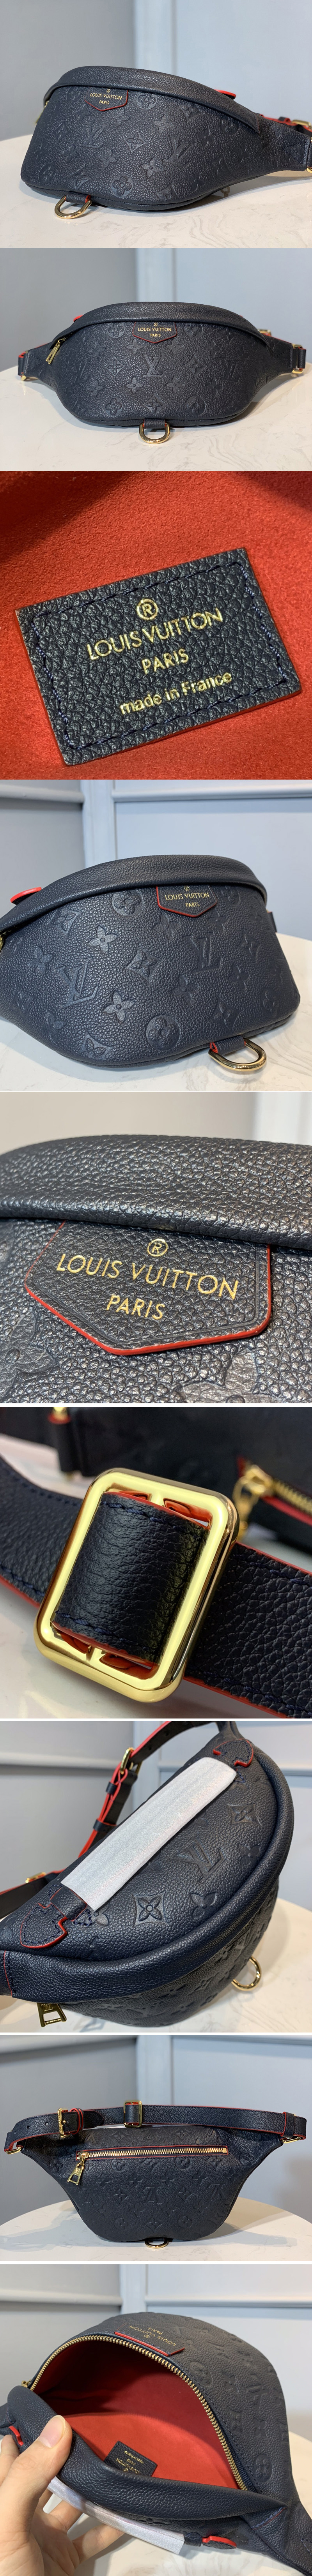 LOUIS VUITTON M44812 Monogram Empreinte BumBag Body Bag Leather